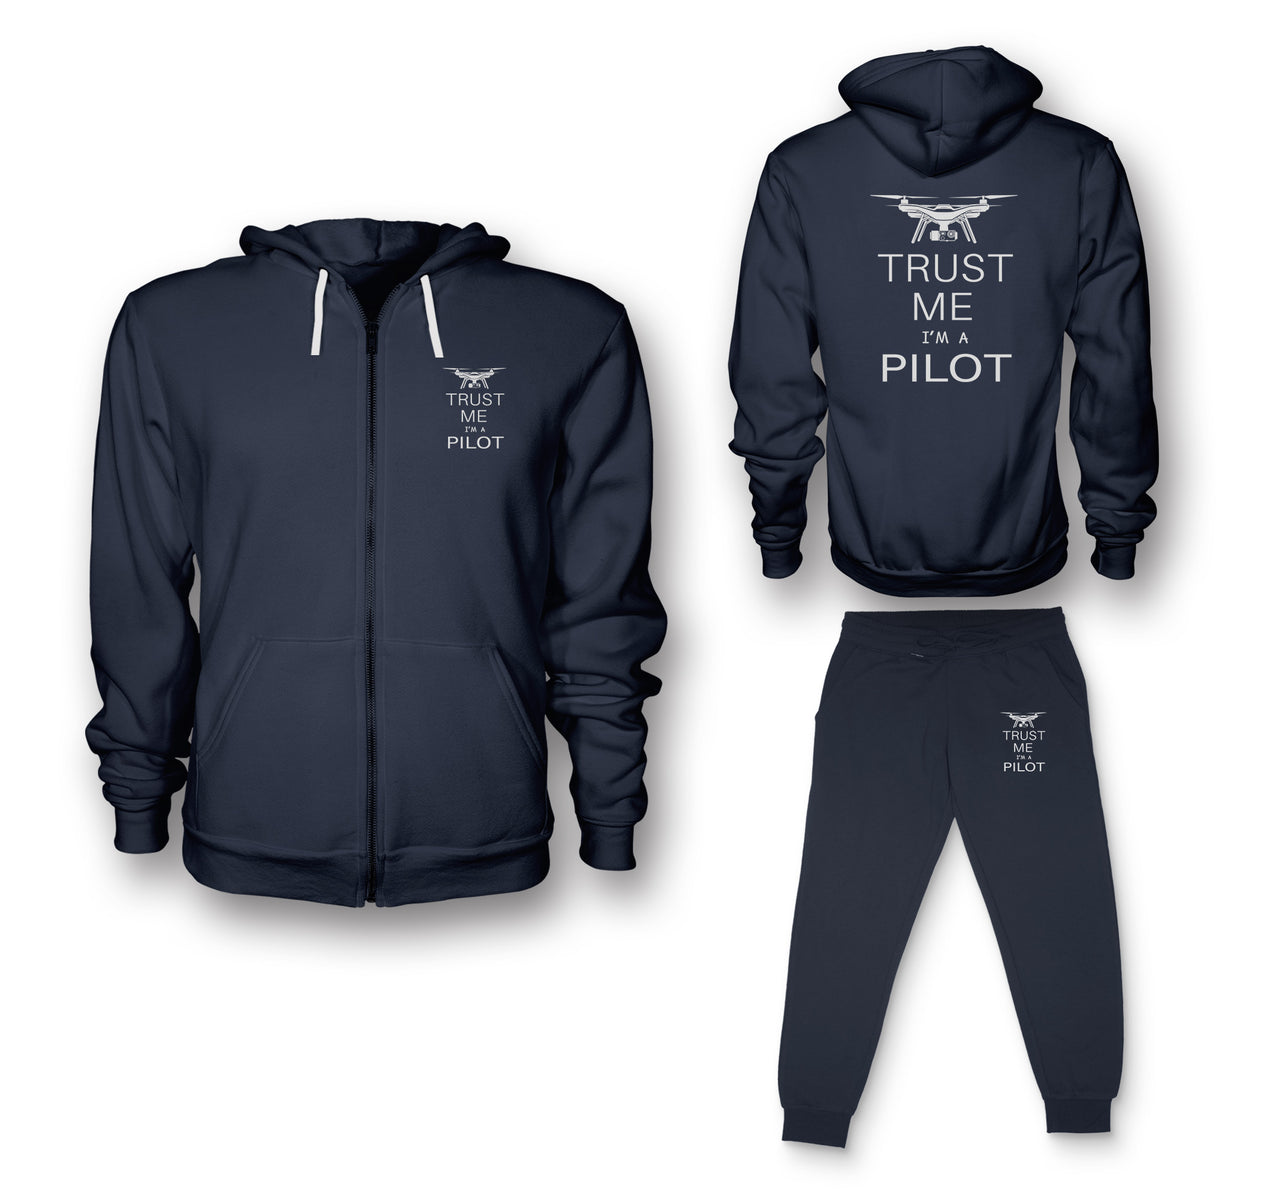 Trust Me I'm a Pilot (Drone) Designed Zipped Hoodies & Sweatpants Set